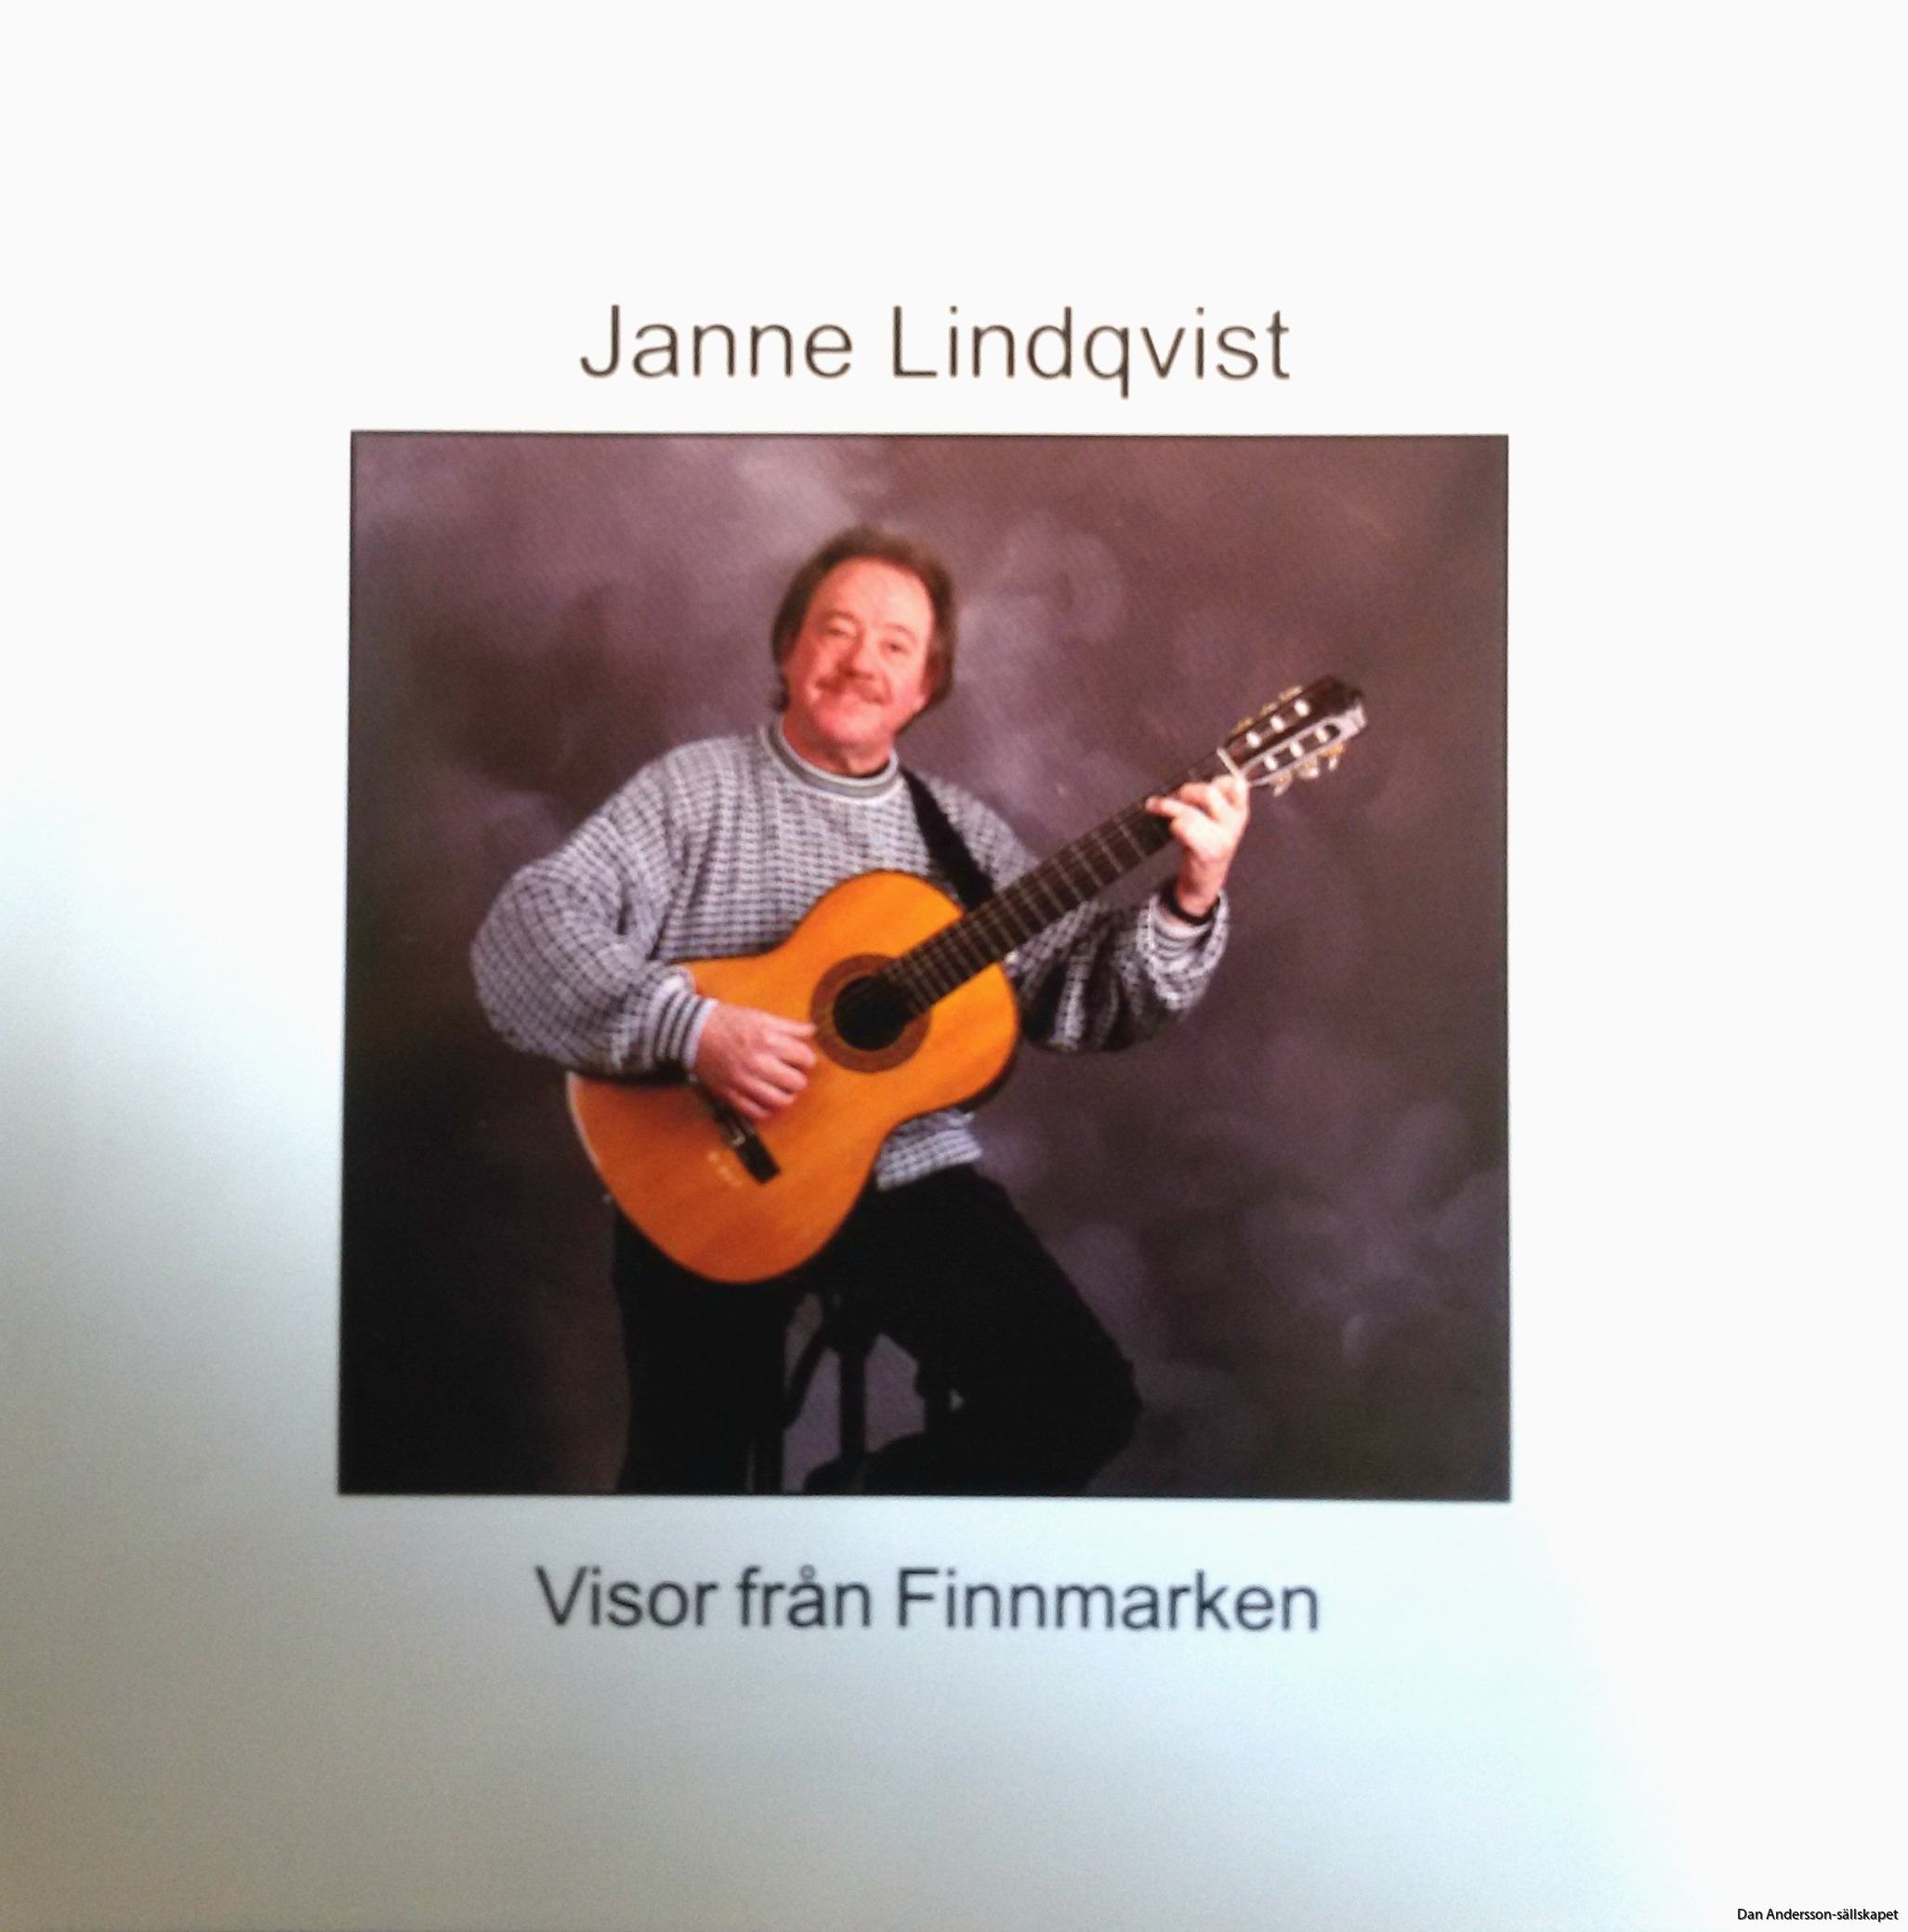 Janne Lindqvist : "Visor från Finnmarken"